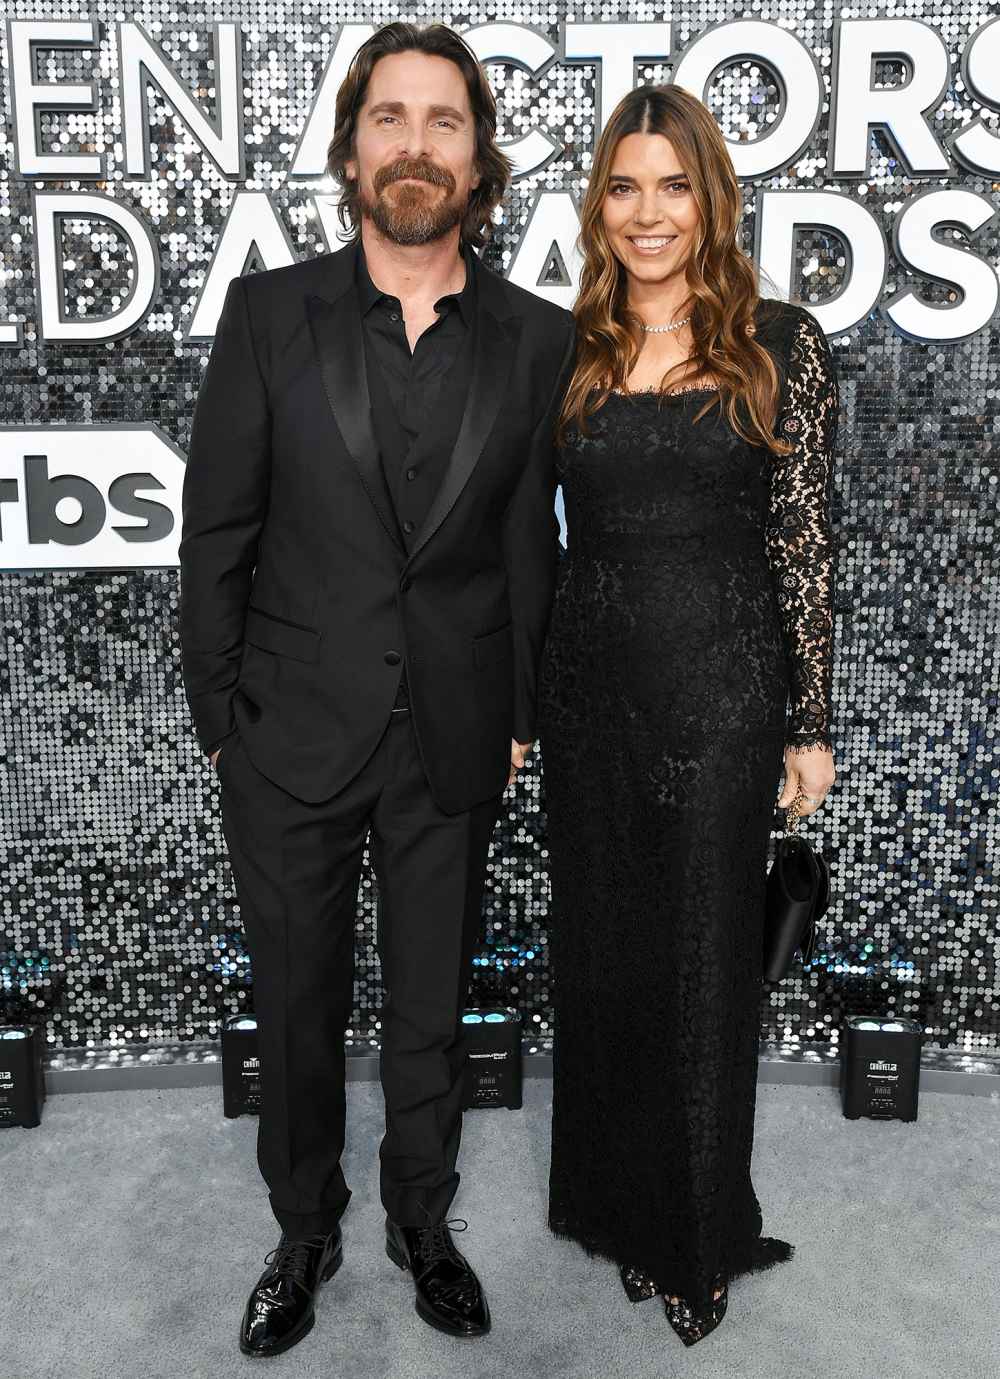 Christian Bale Makes Red Carpet Return With Wife Sibi Blazic at SAG Awards 2020